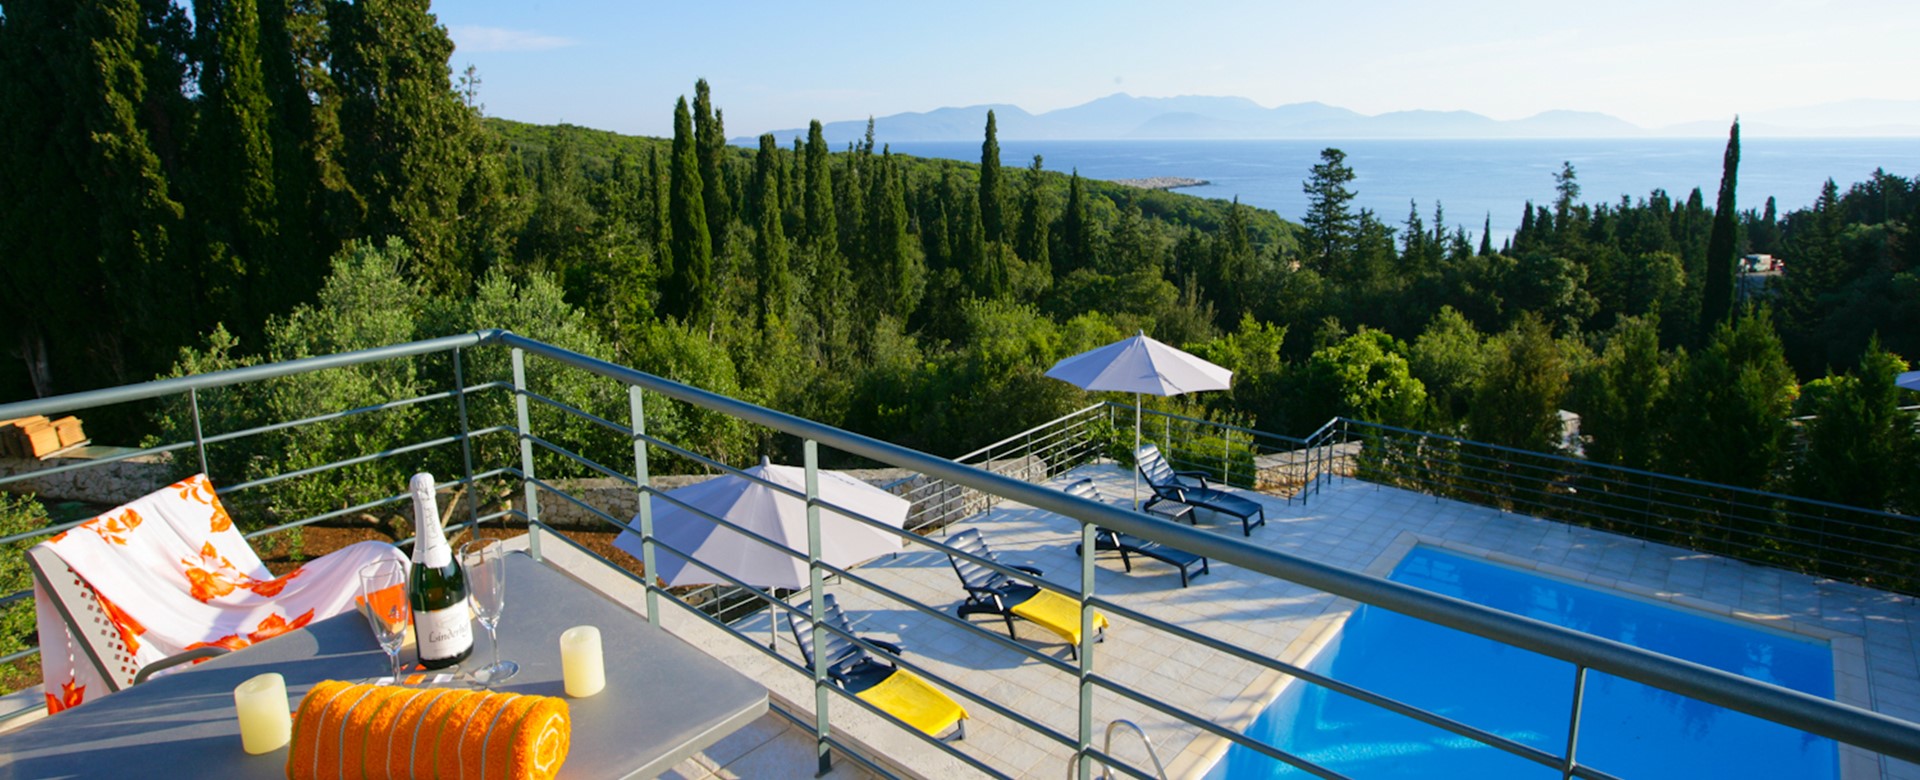 Impressive views from balcony over private pool and established landscape at Villa Roberto, Fiscardo, Kefalonia, Greek Islands